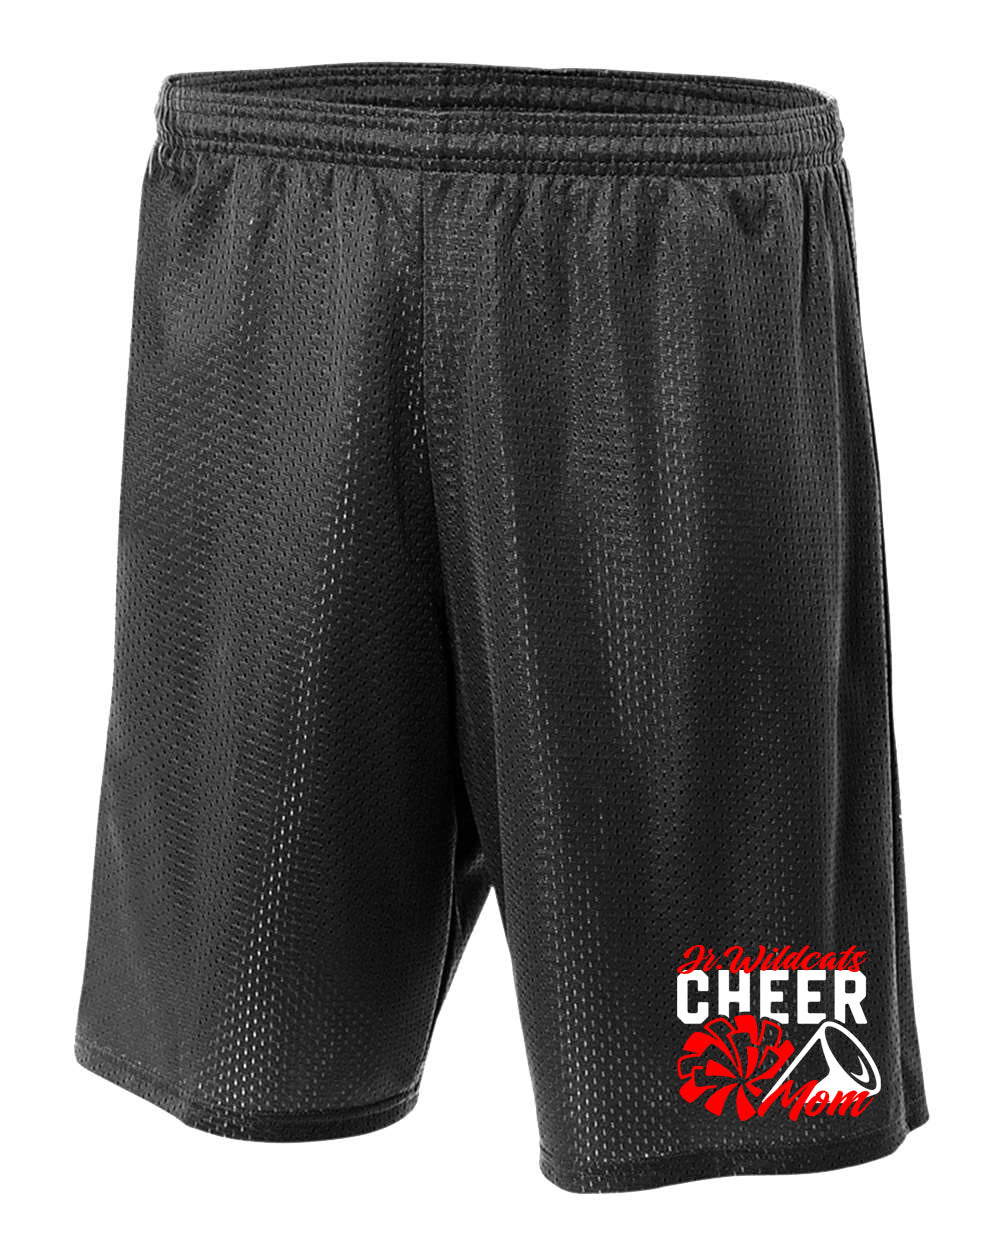 High Point Cheer Design 4 Shorts